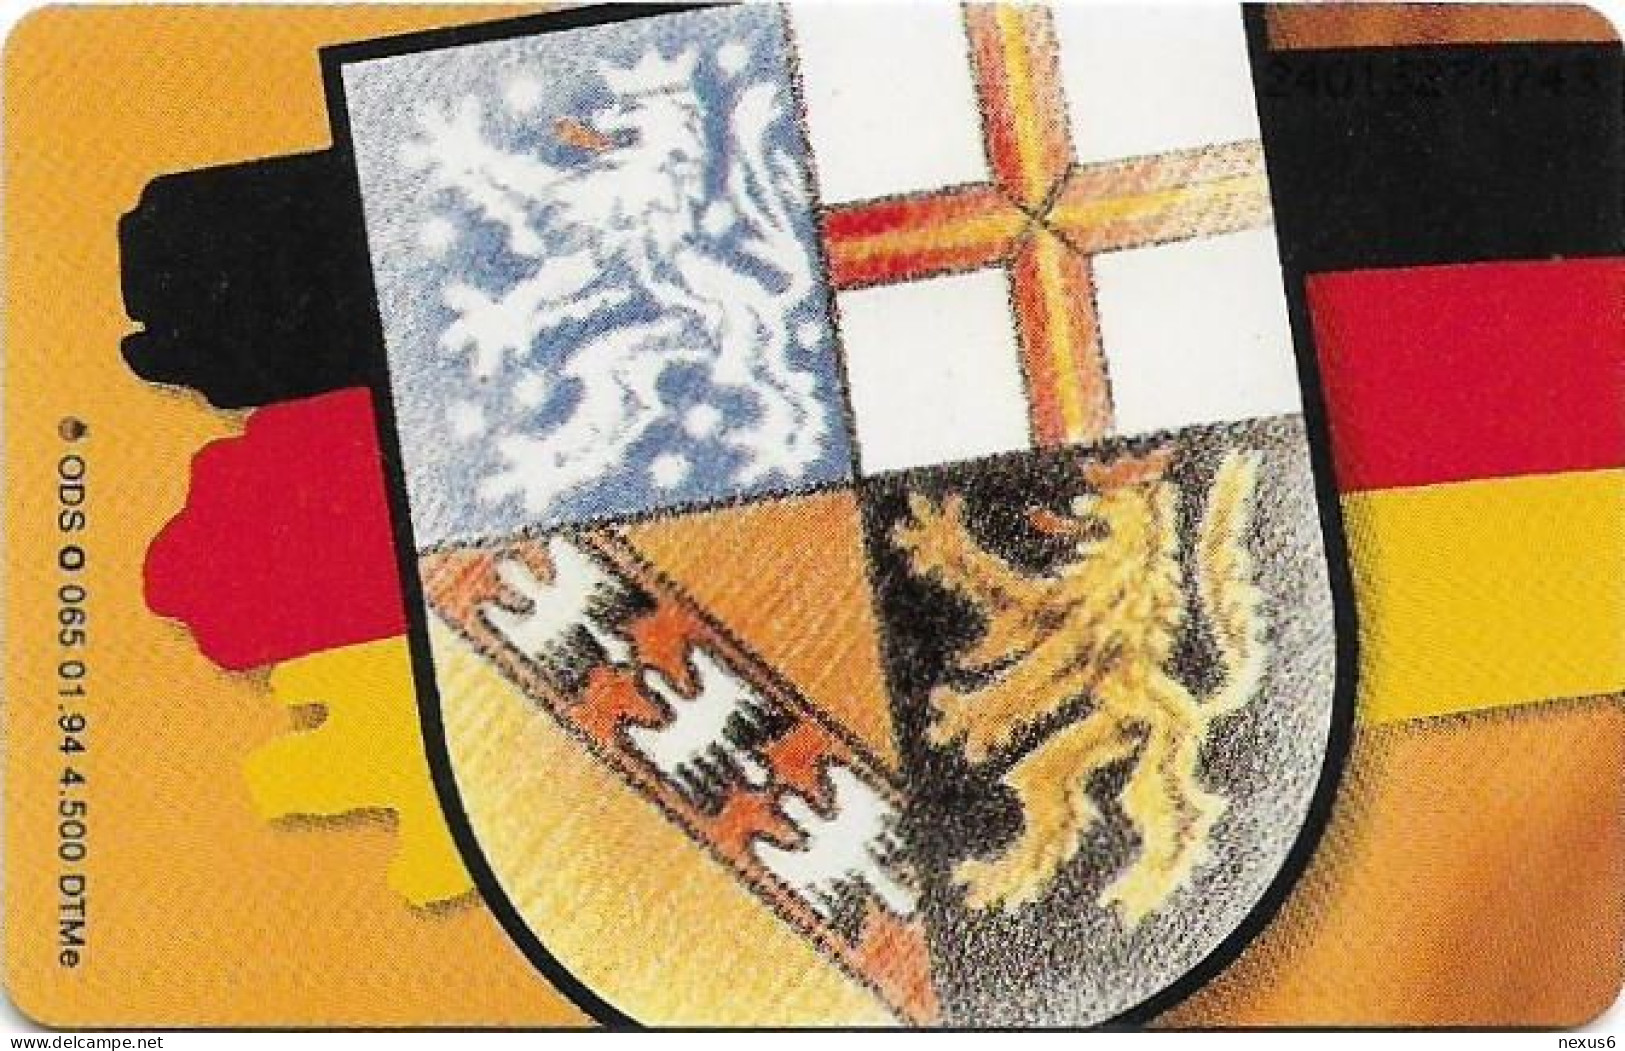 Germany - Wappen Der BRD - Saarland (Ludwigskirche) - O 0065 - 01.1994, 6DM, 4.500ex, Mint - O-Series: Kundenserie Vom Sammlerservice Ausgeschlossen